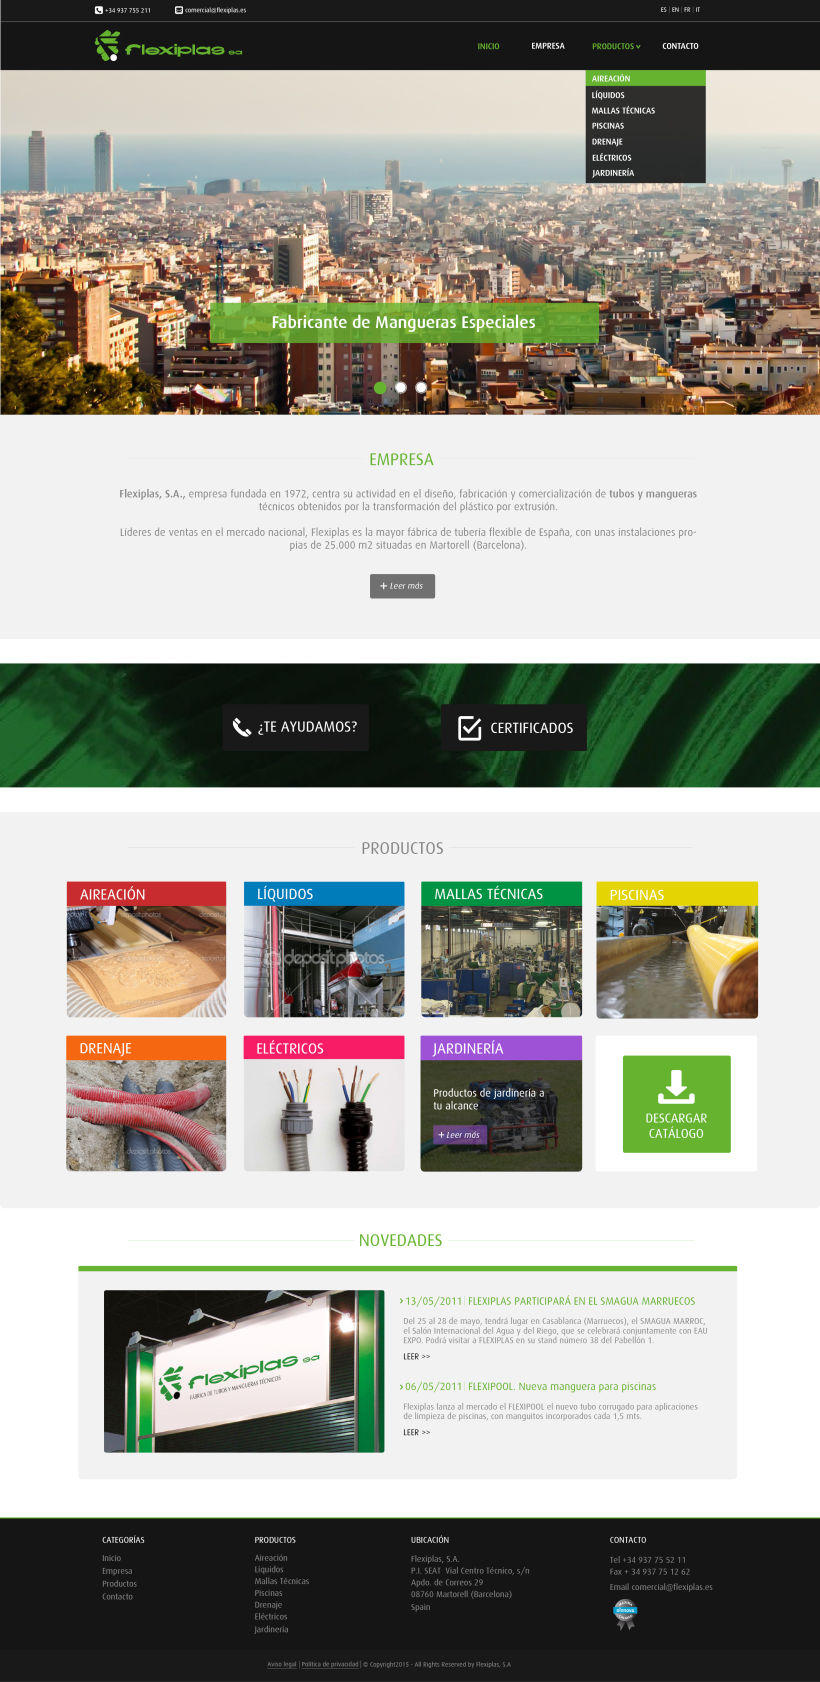 Diseño de la portada de la web corporativa para 'Flexiplas' 0